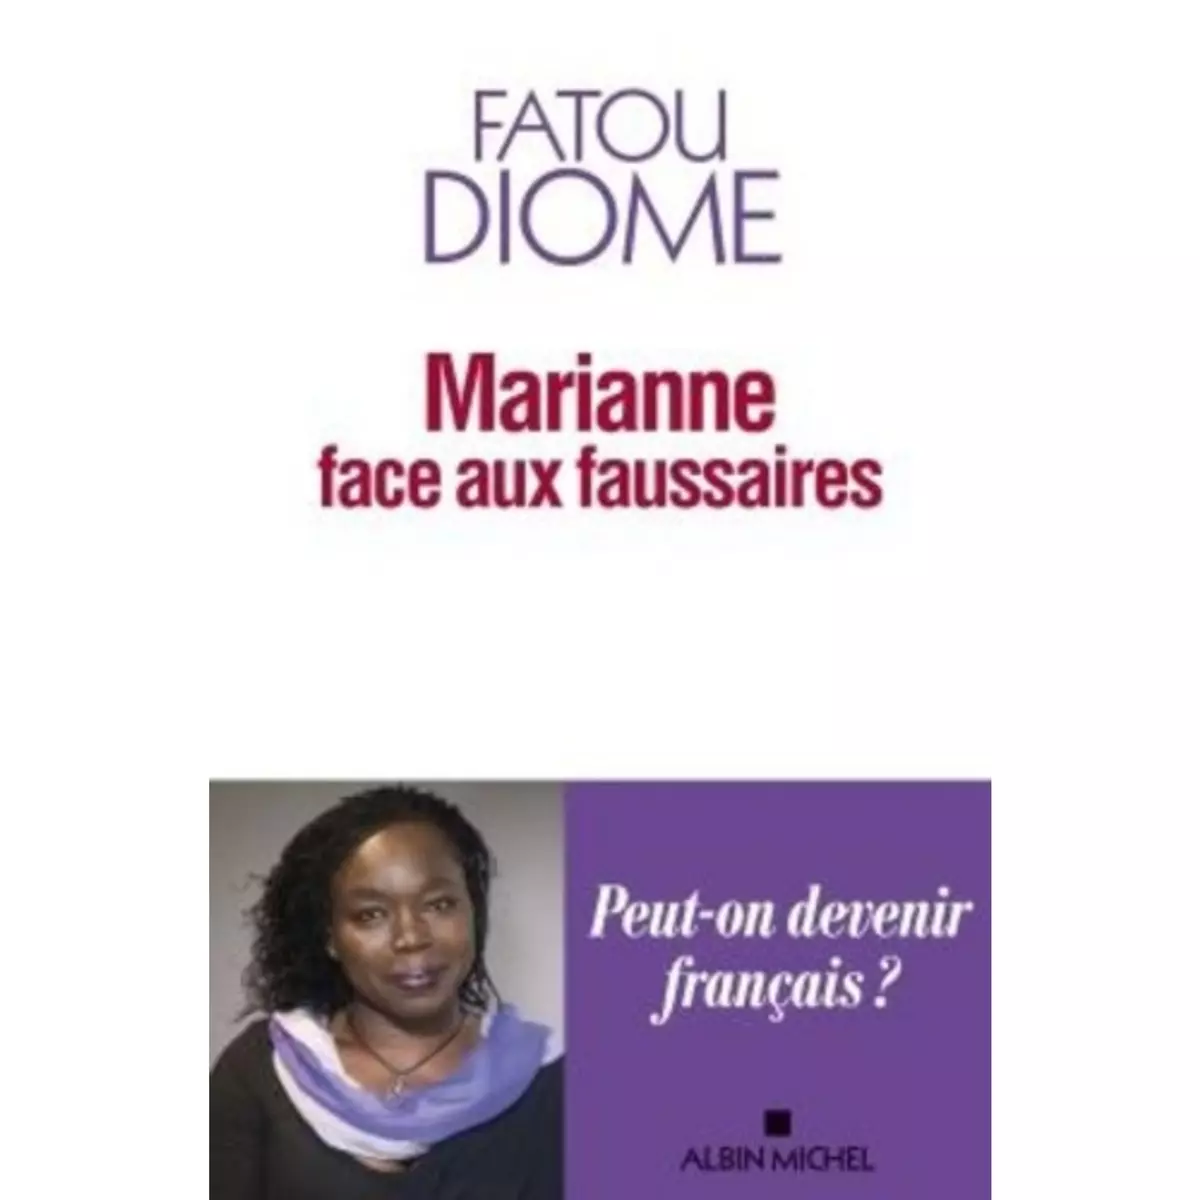  MARIANNE FACE AUX FAUSSAIRES, Diome Fatou